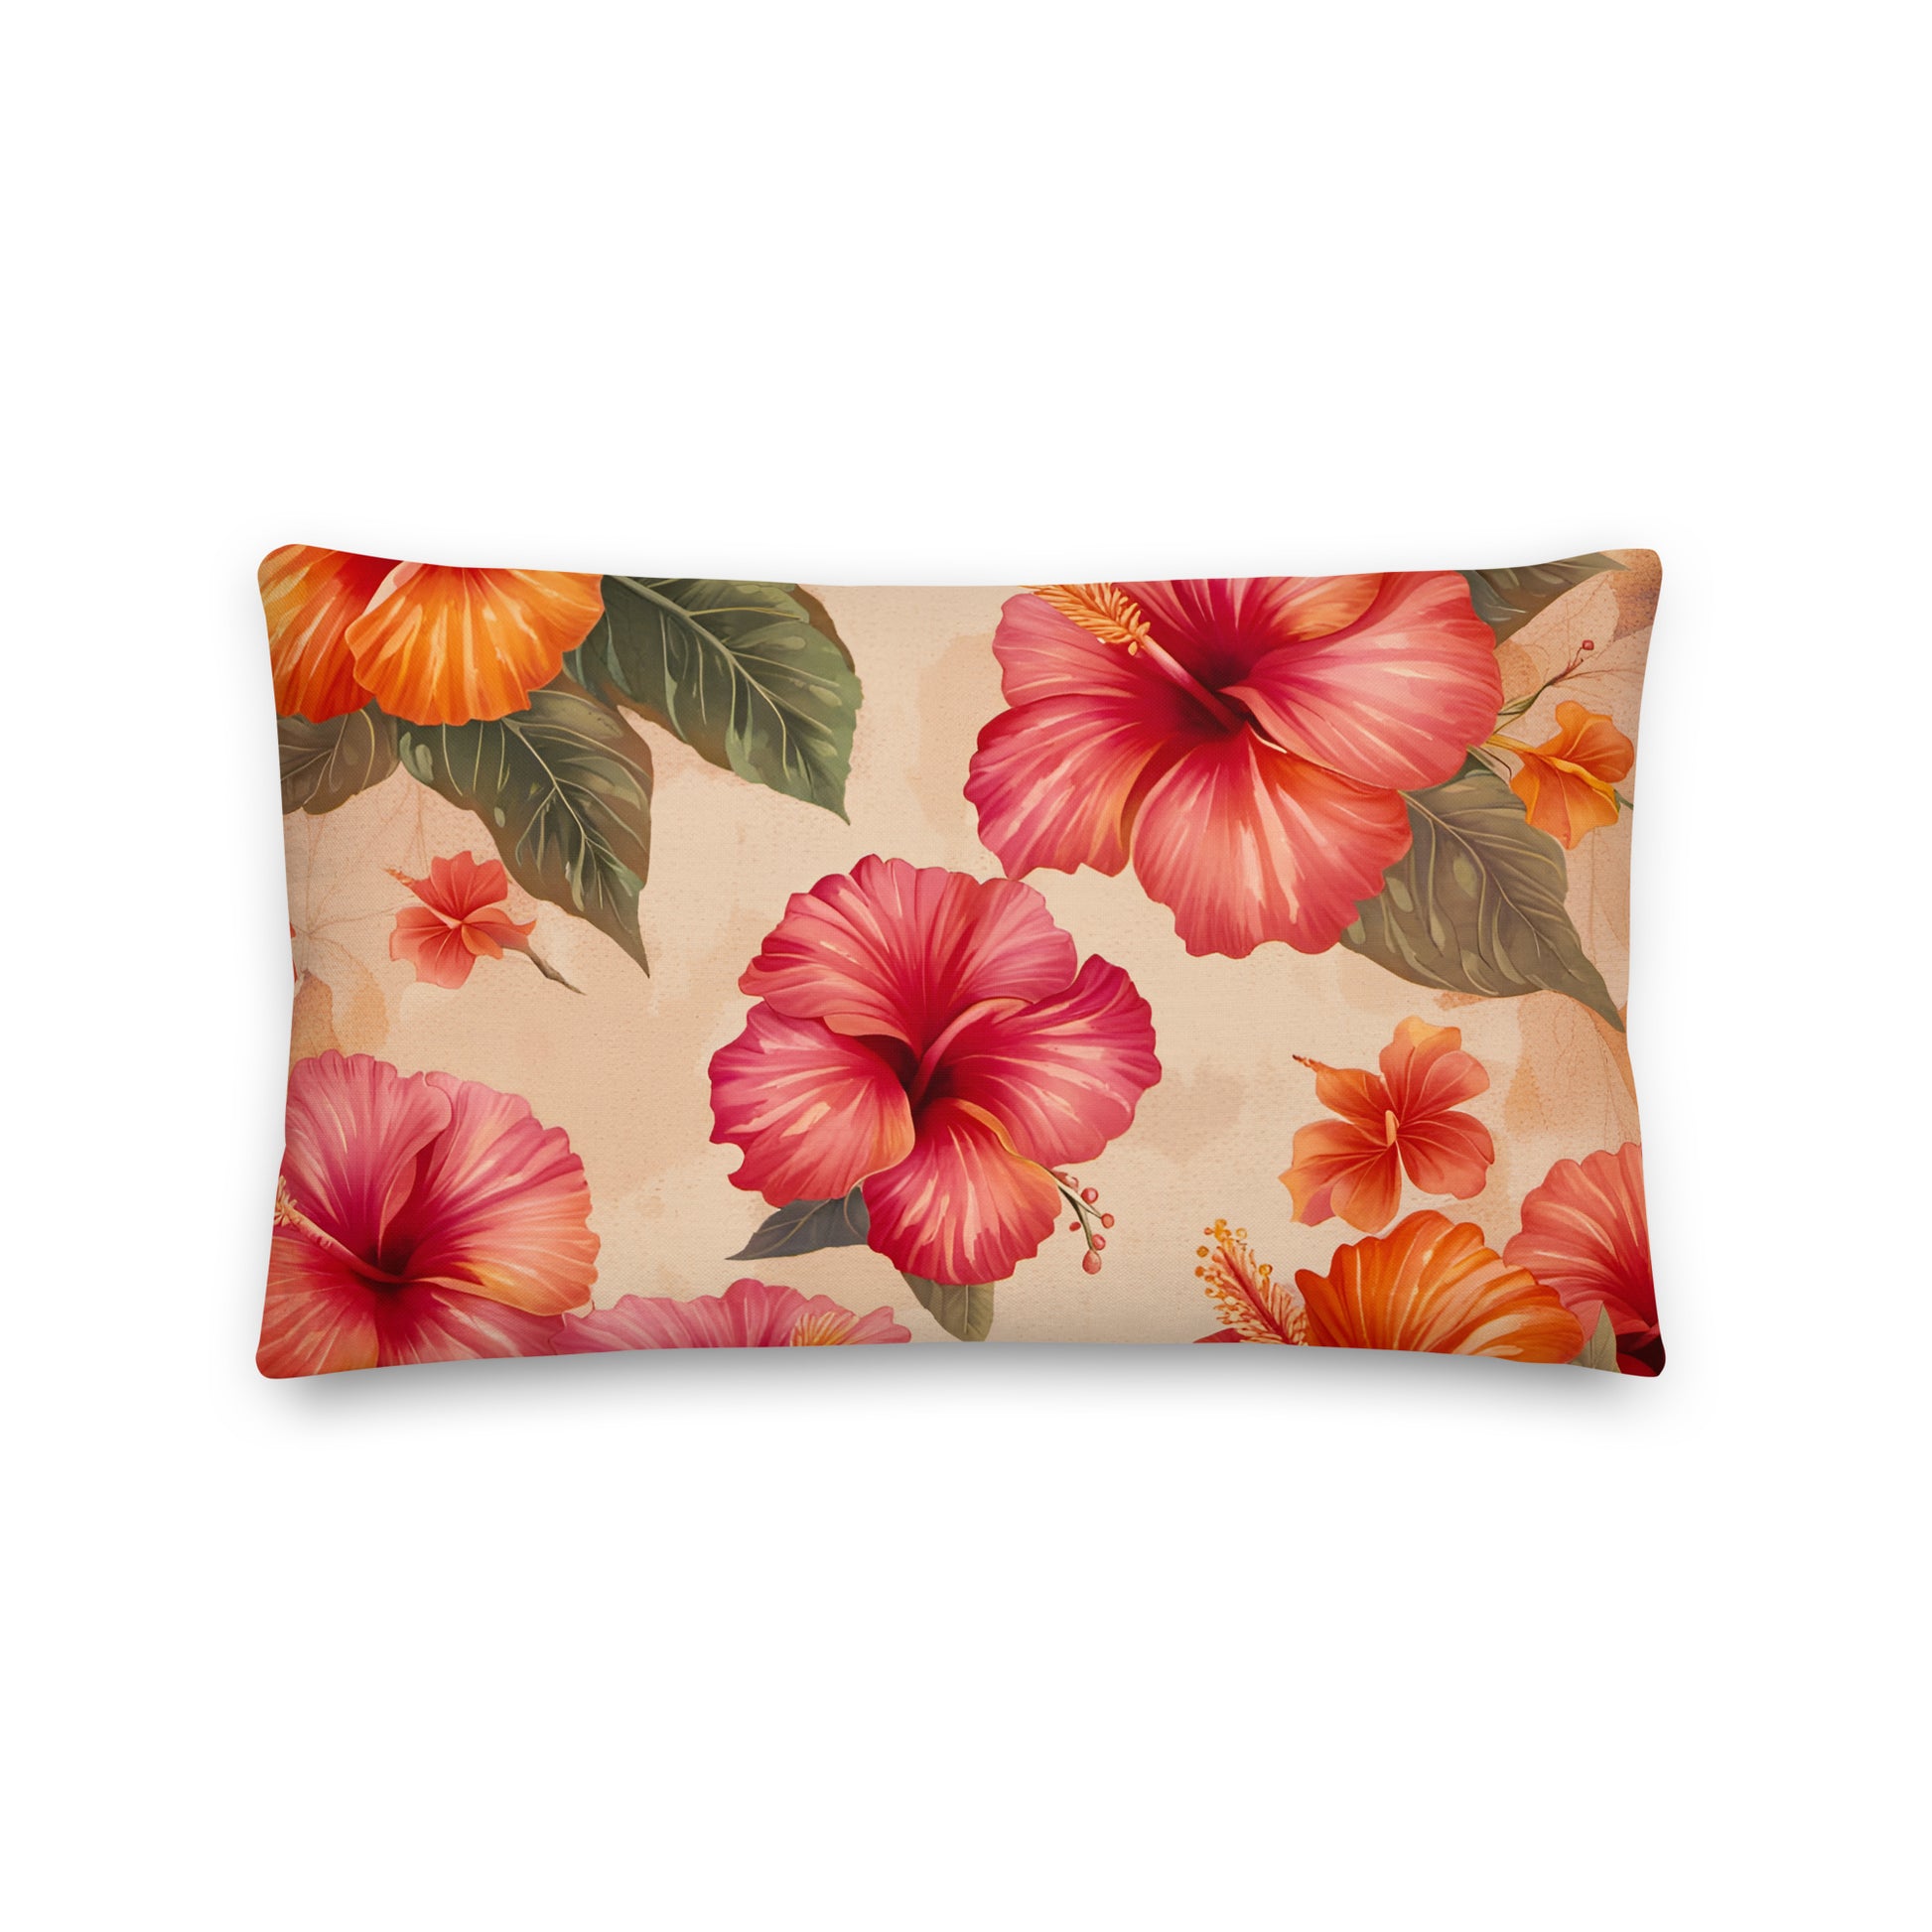 Premium Tropical Themed Lumbar Pillow 20x12 Pink and Orange Hibiscus Flowers Print